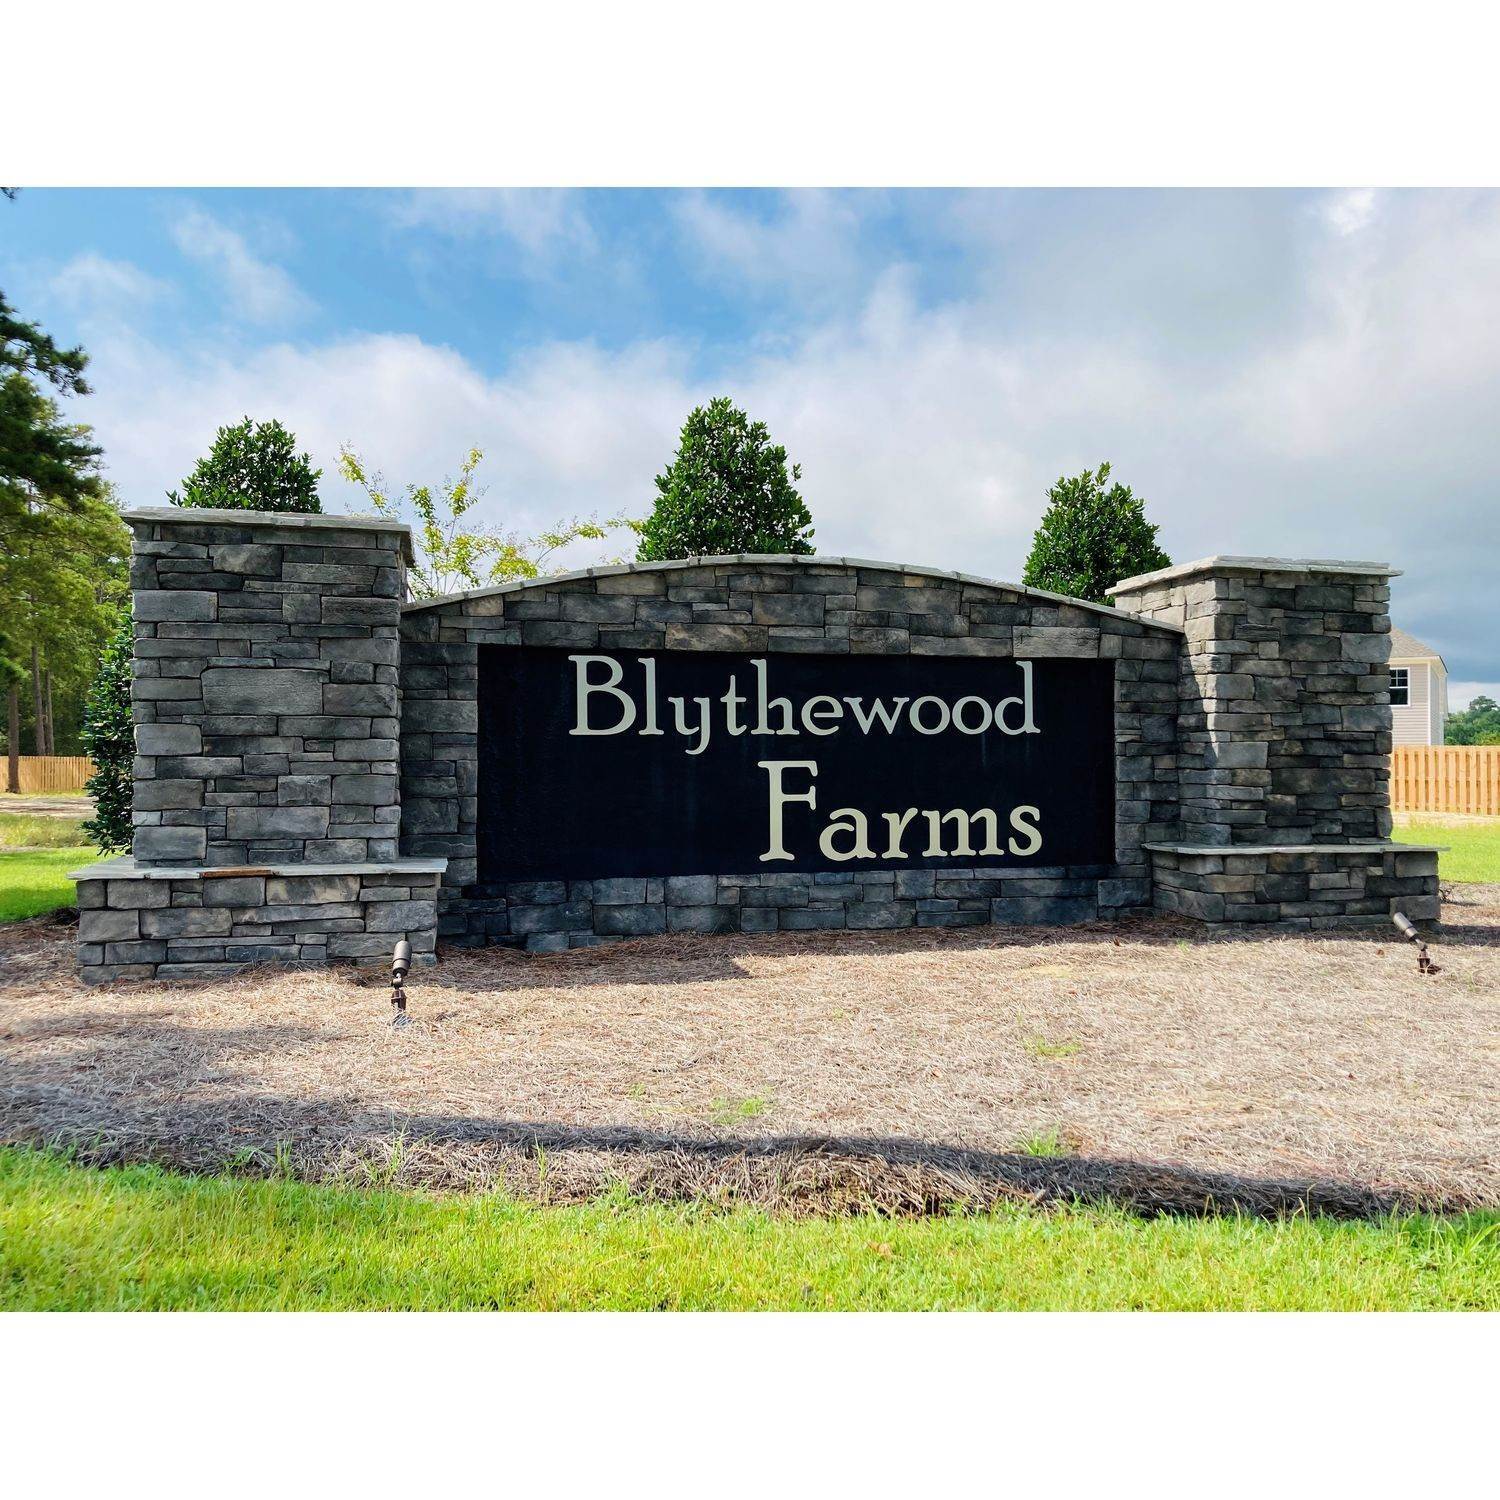 2. Blythewood Farms building at 1104 Deep Creek Road, Blythewood, SC 29016